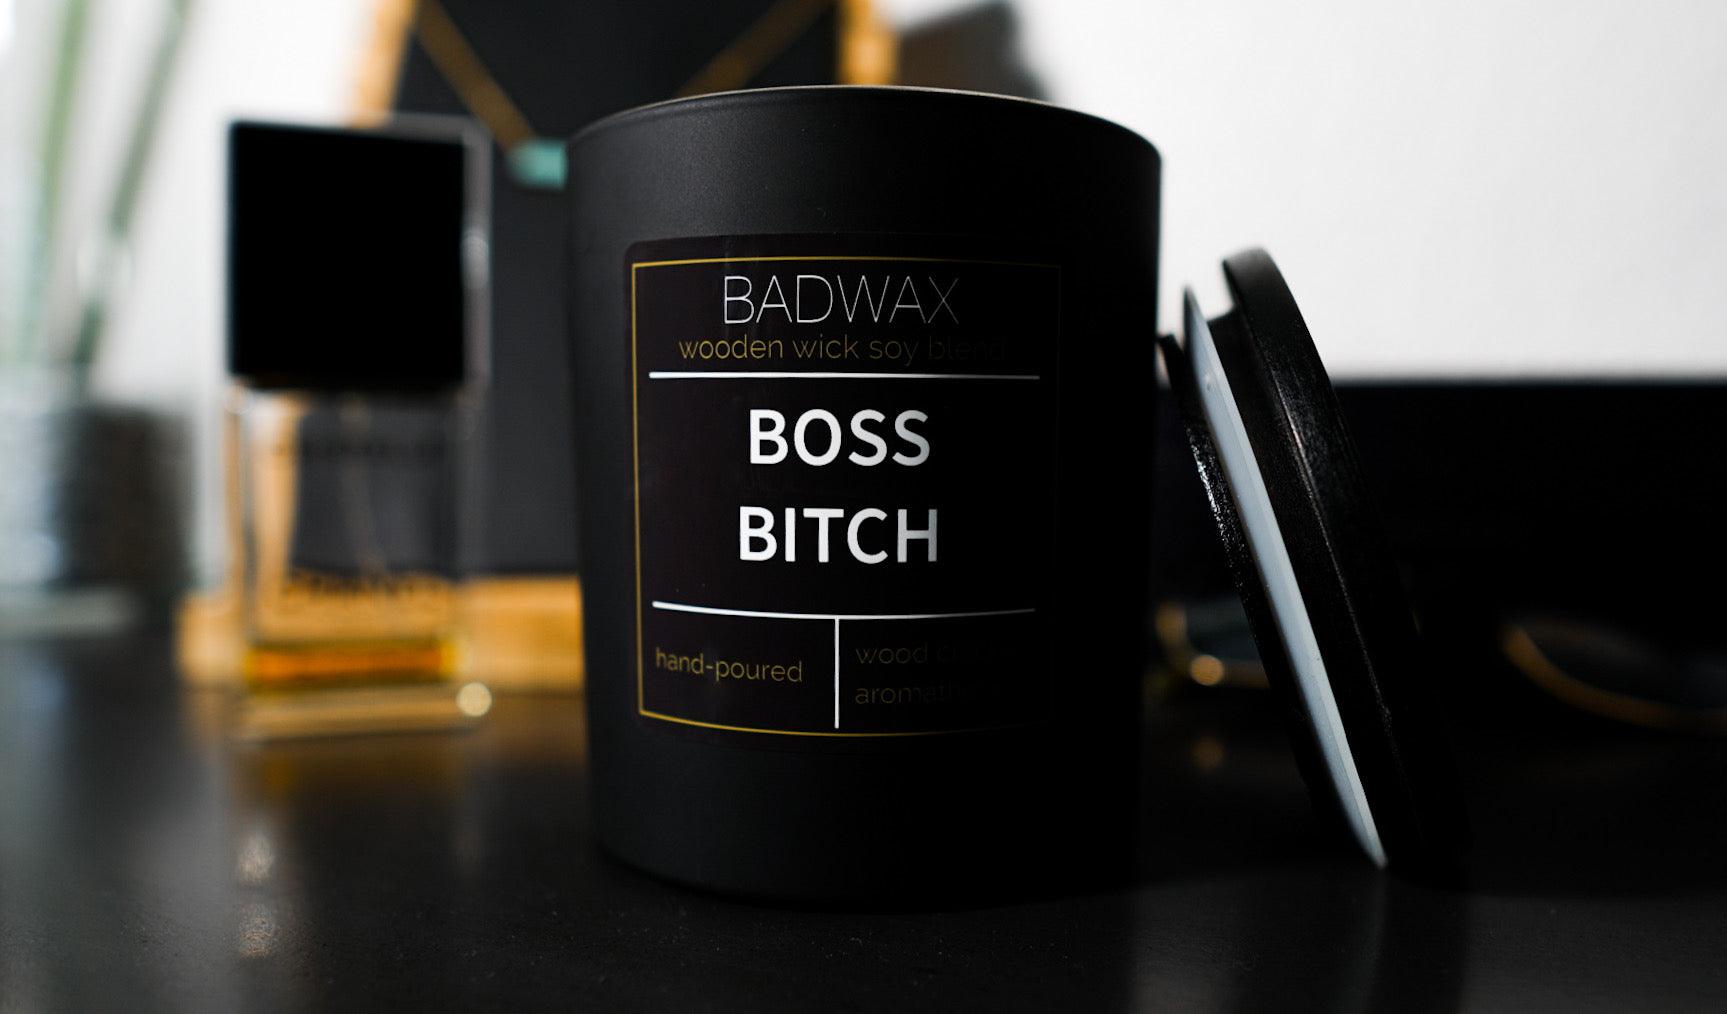 Boss Bitch™ - Woodwick Candle - BADWAX